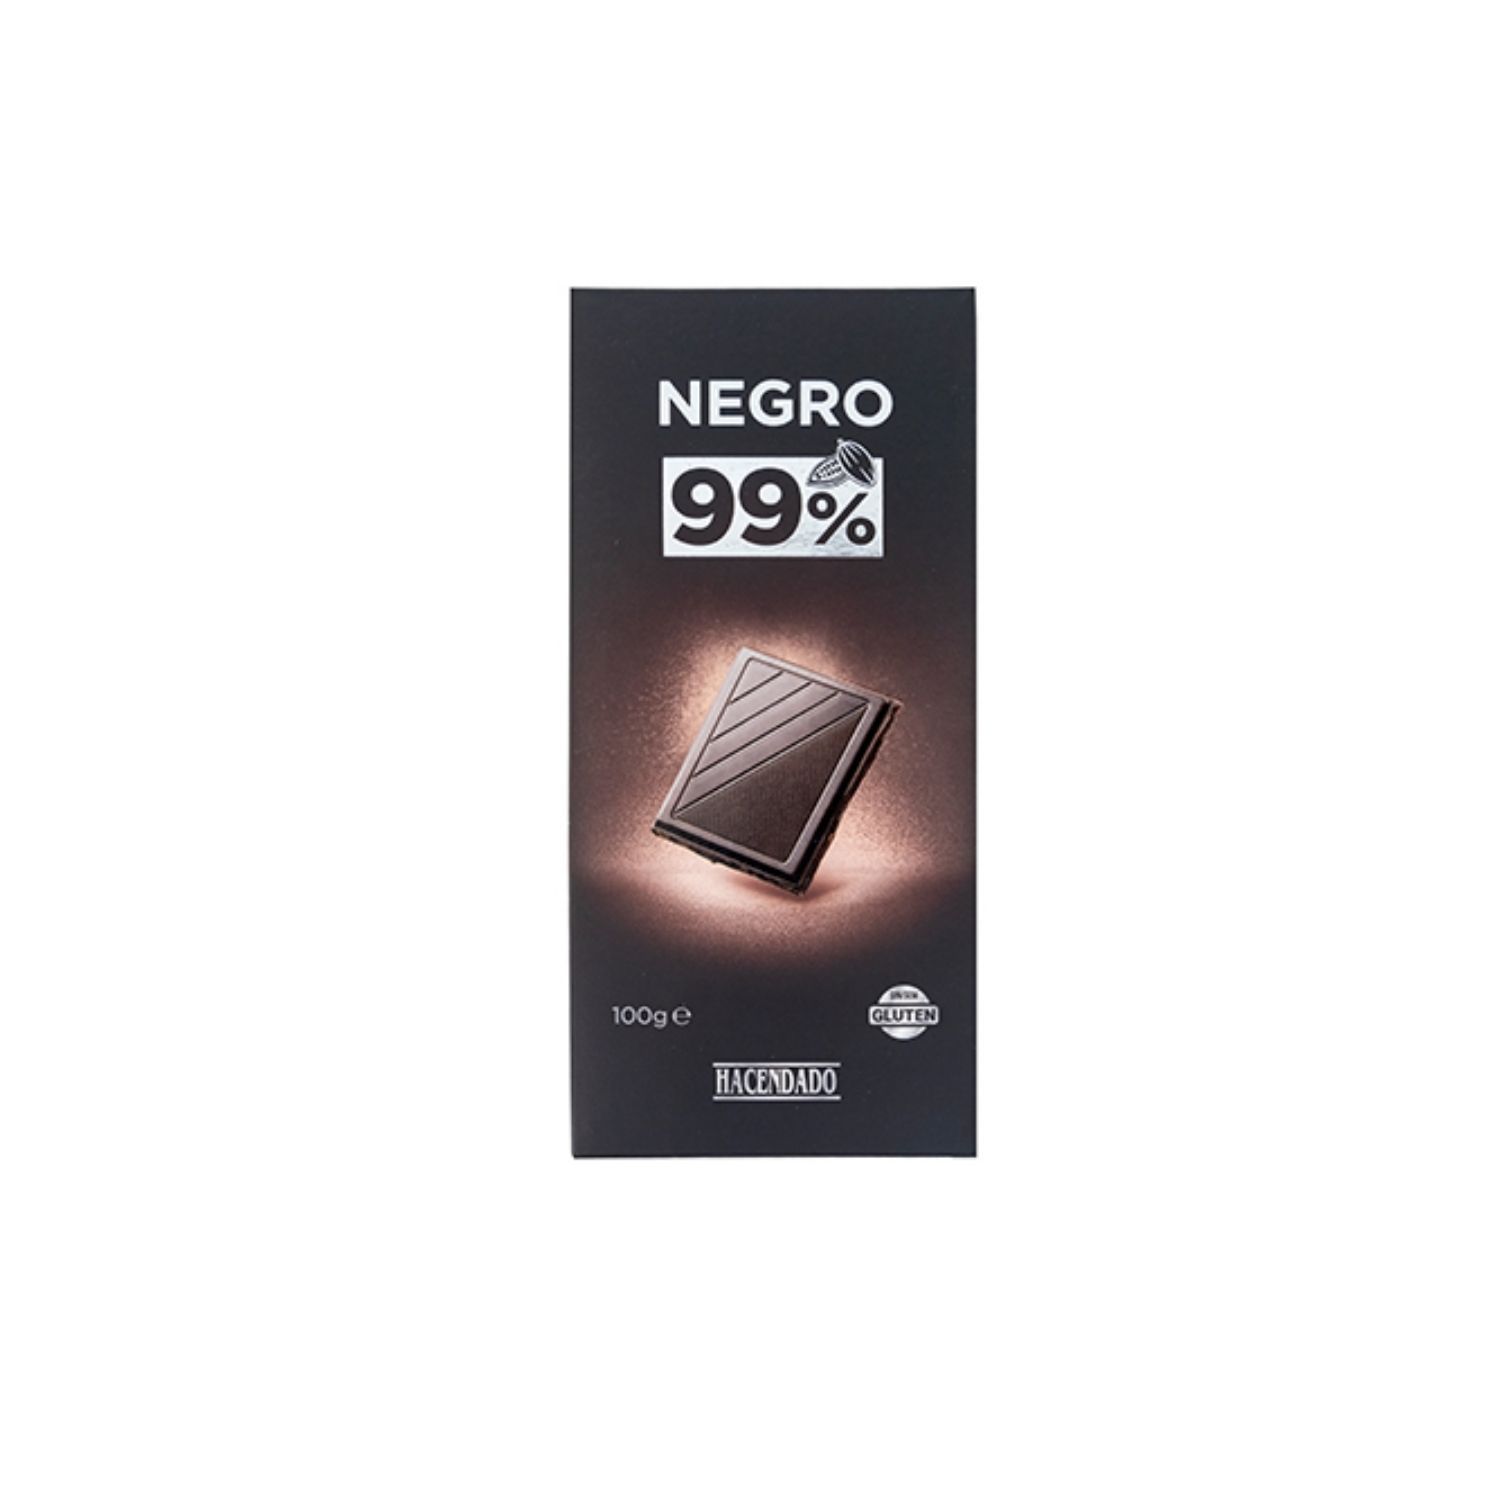 chocolate negro 99% cacao natural y sin gluten